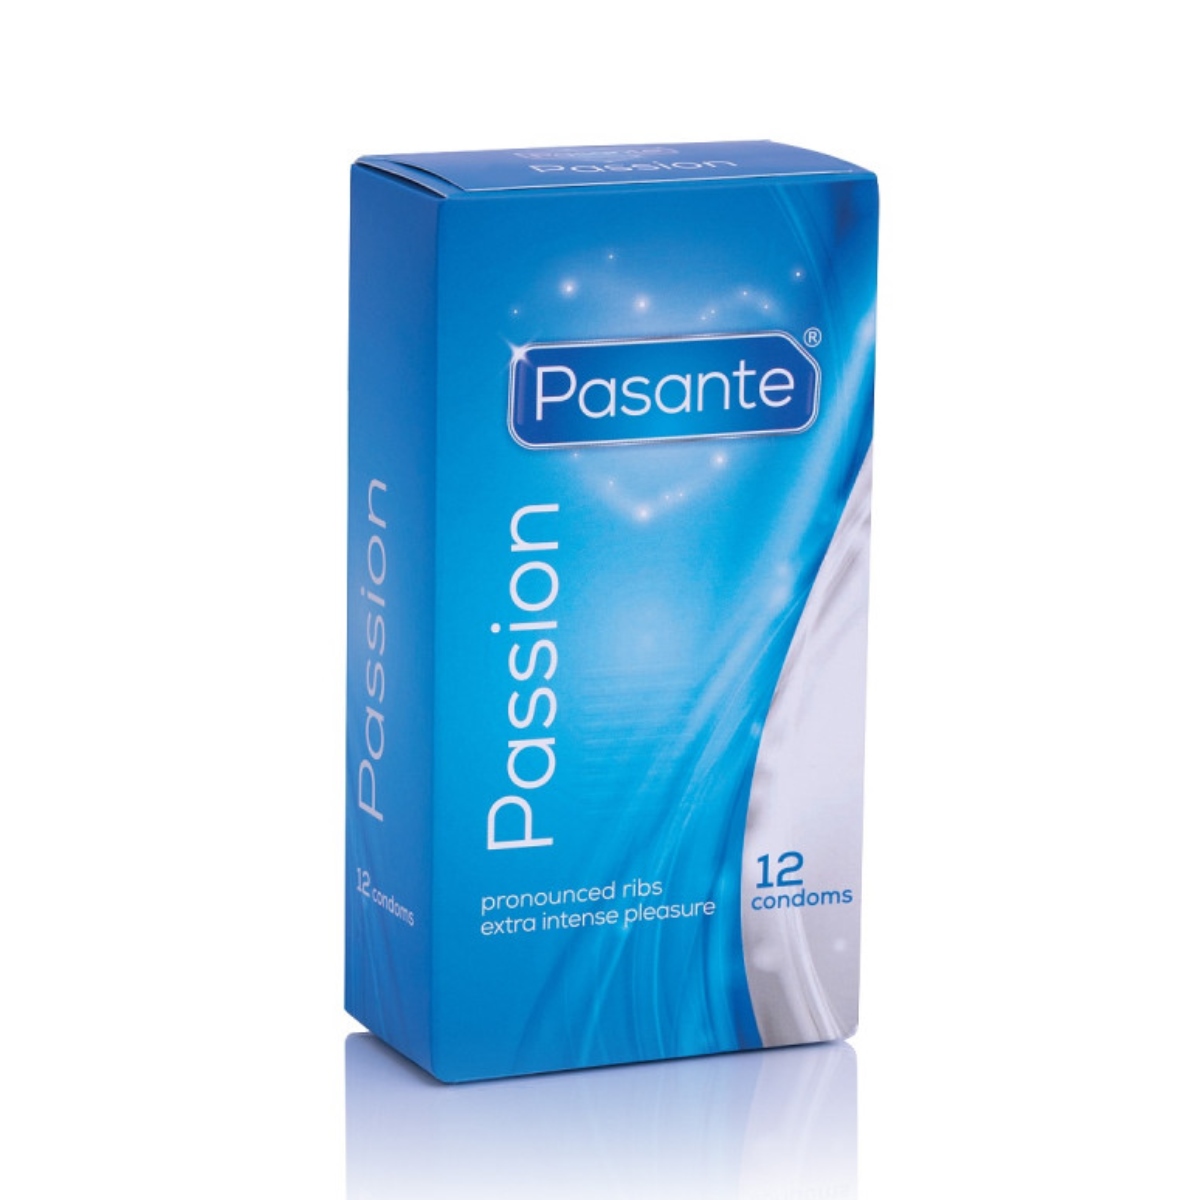 Pasante D-225495 Preservatius Passion pack 12 